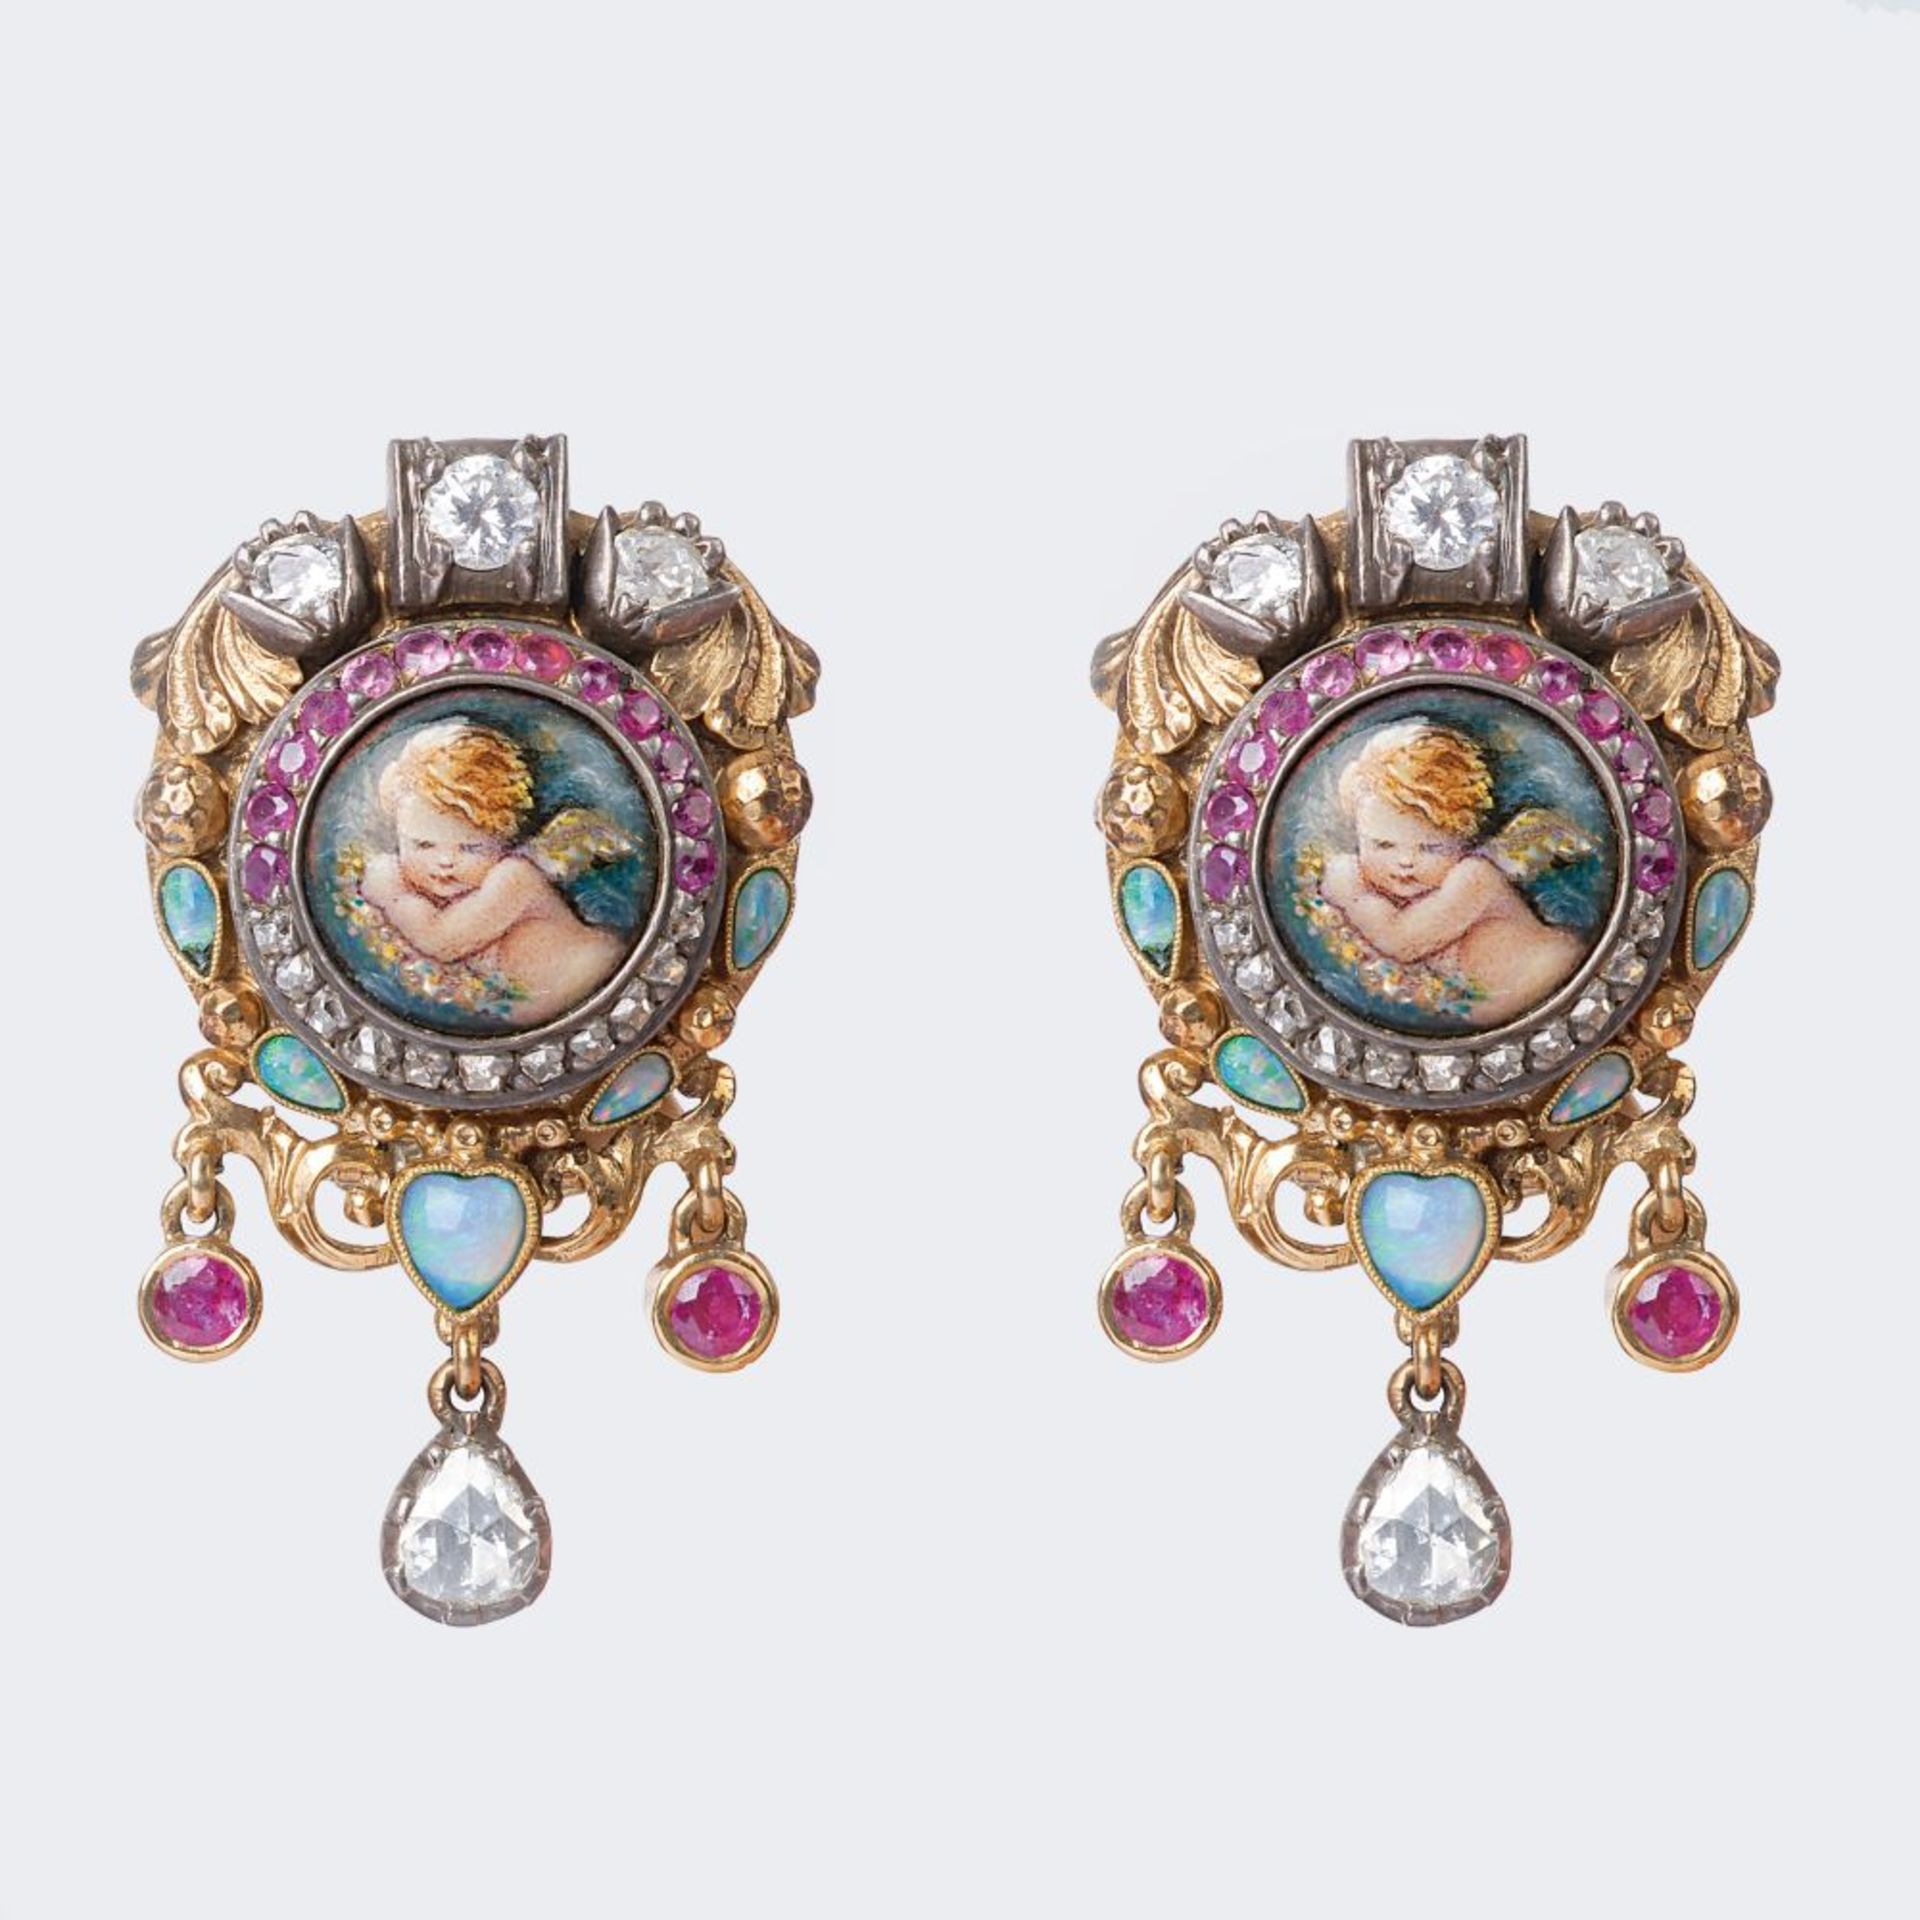 A Pair of Opal Ruby Diamond Earrings with enamel decor.